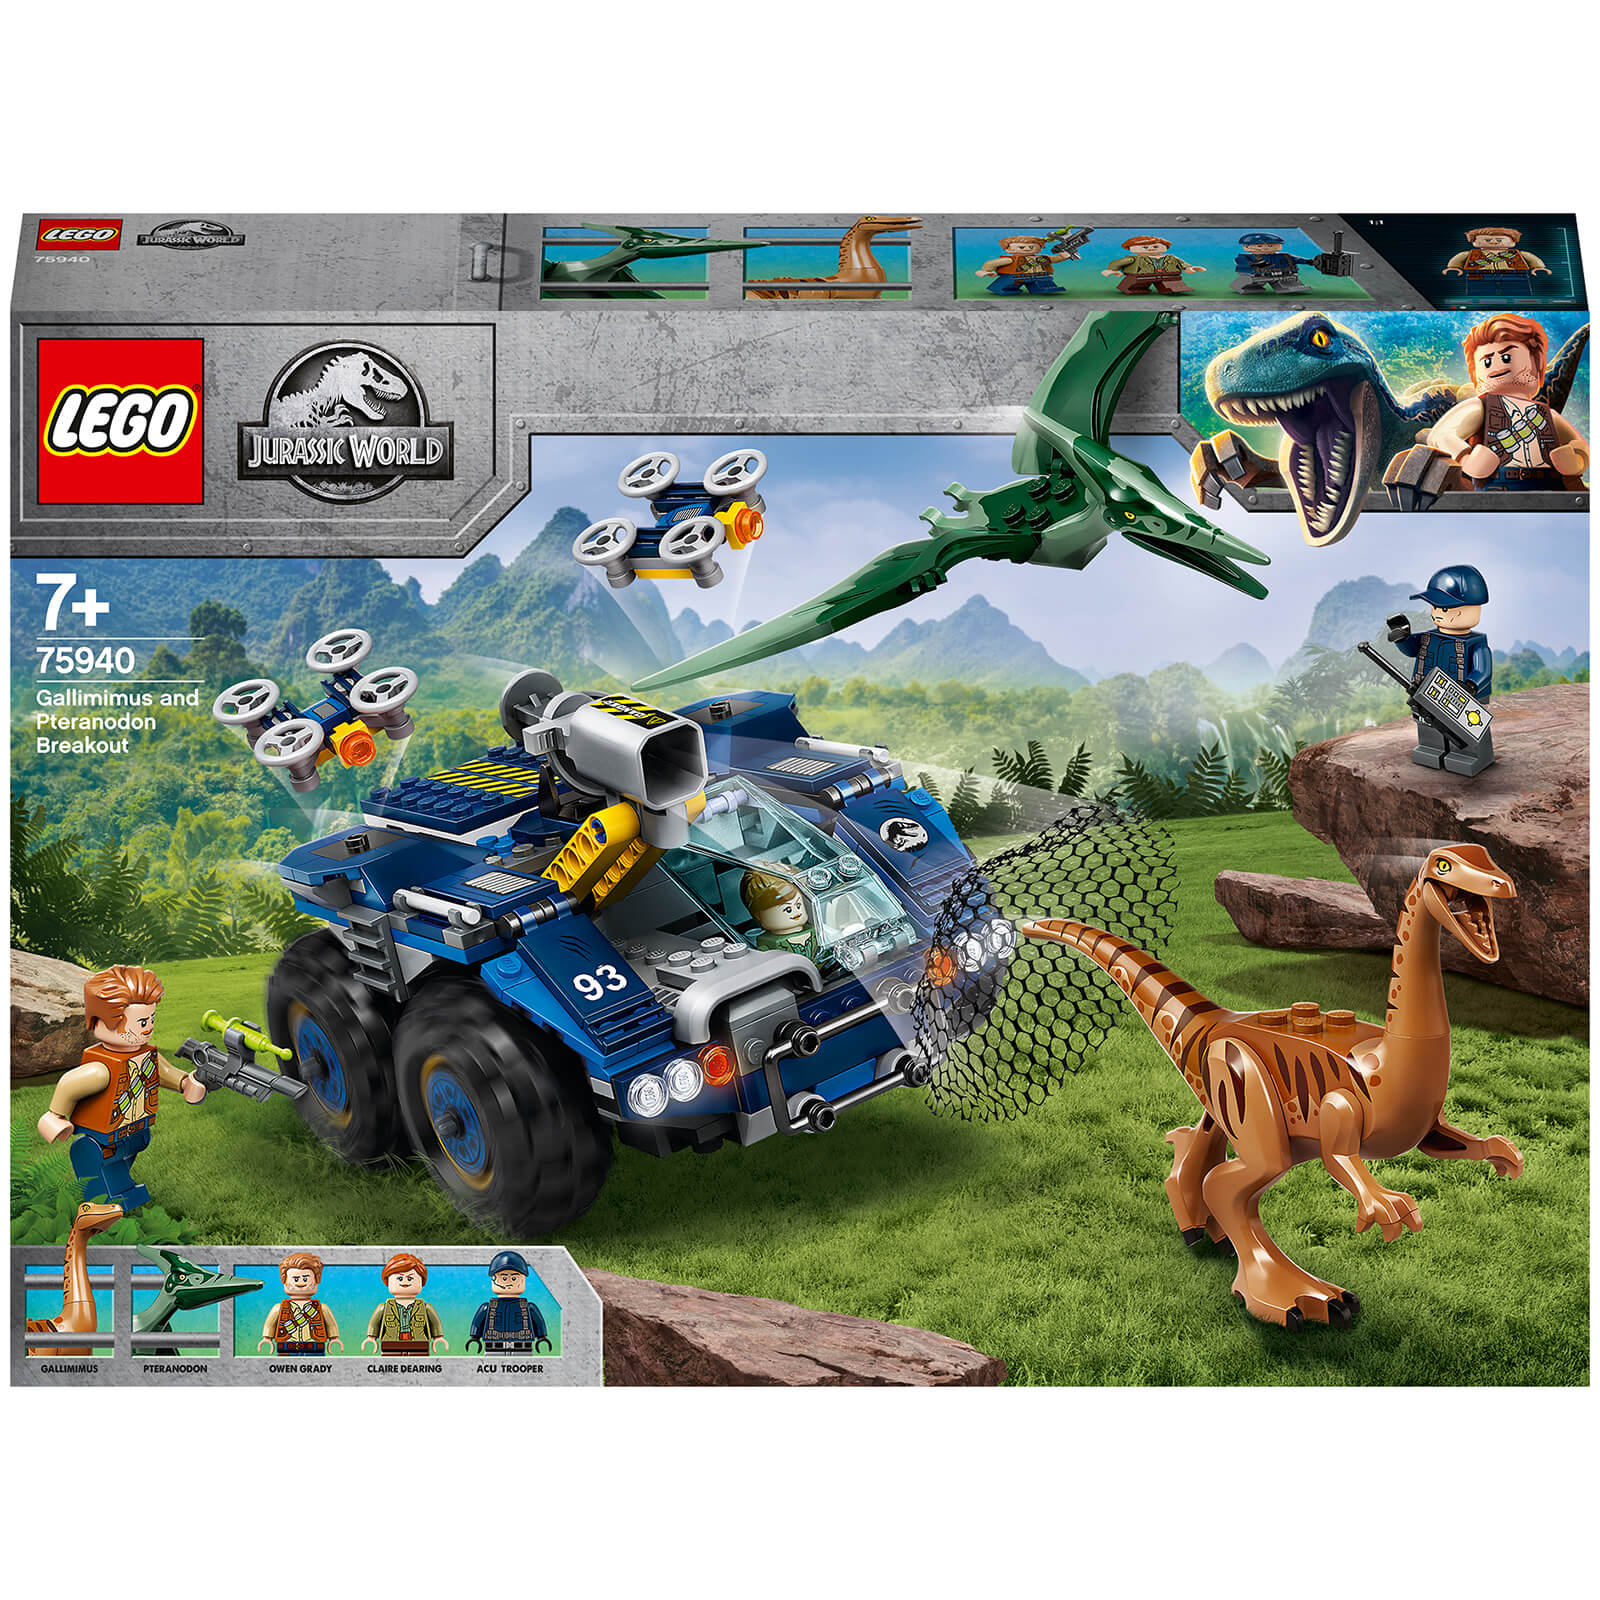 Image of LEGO Jurassic World: Pteranodon Dinosaur Breakout Toy (75940)